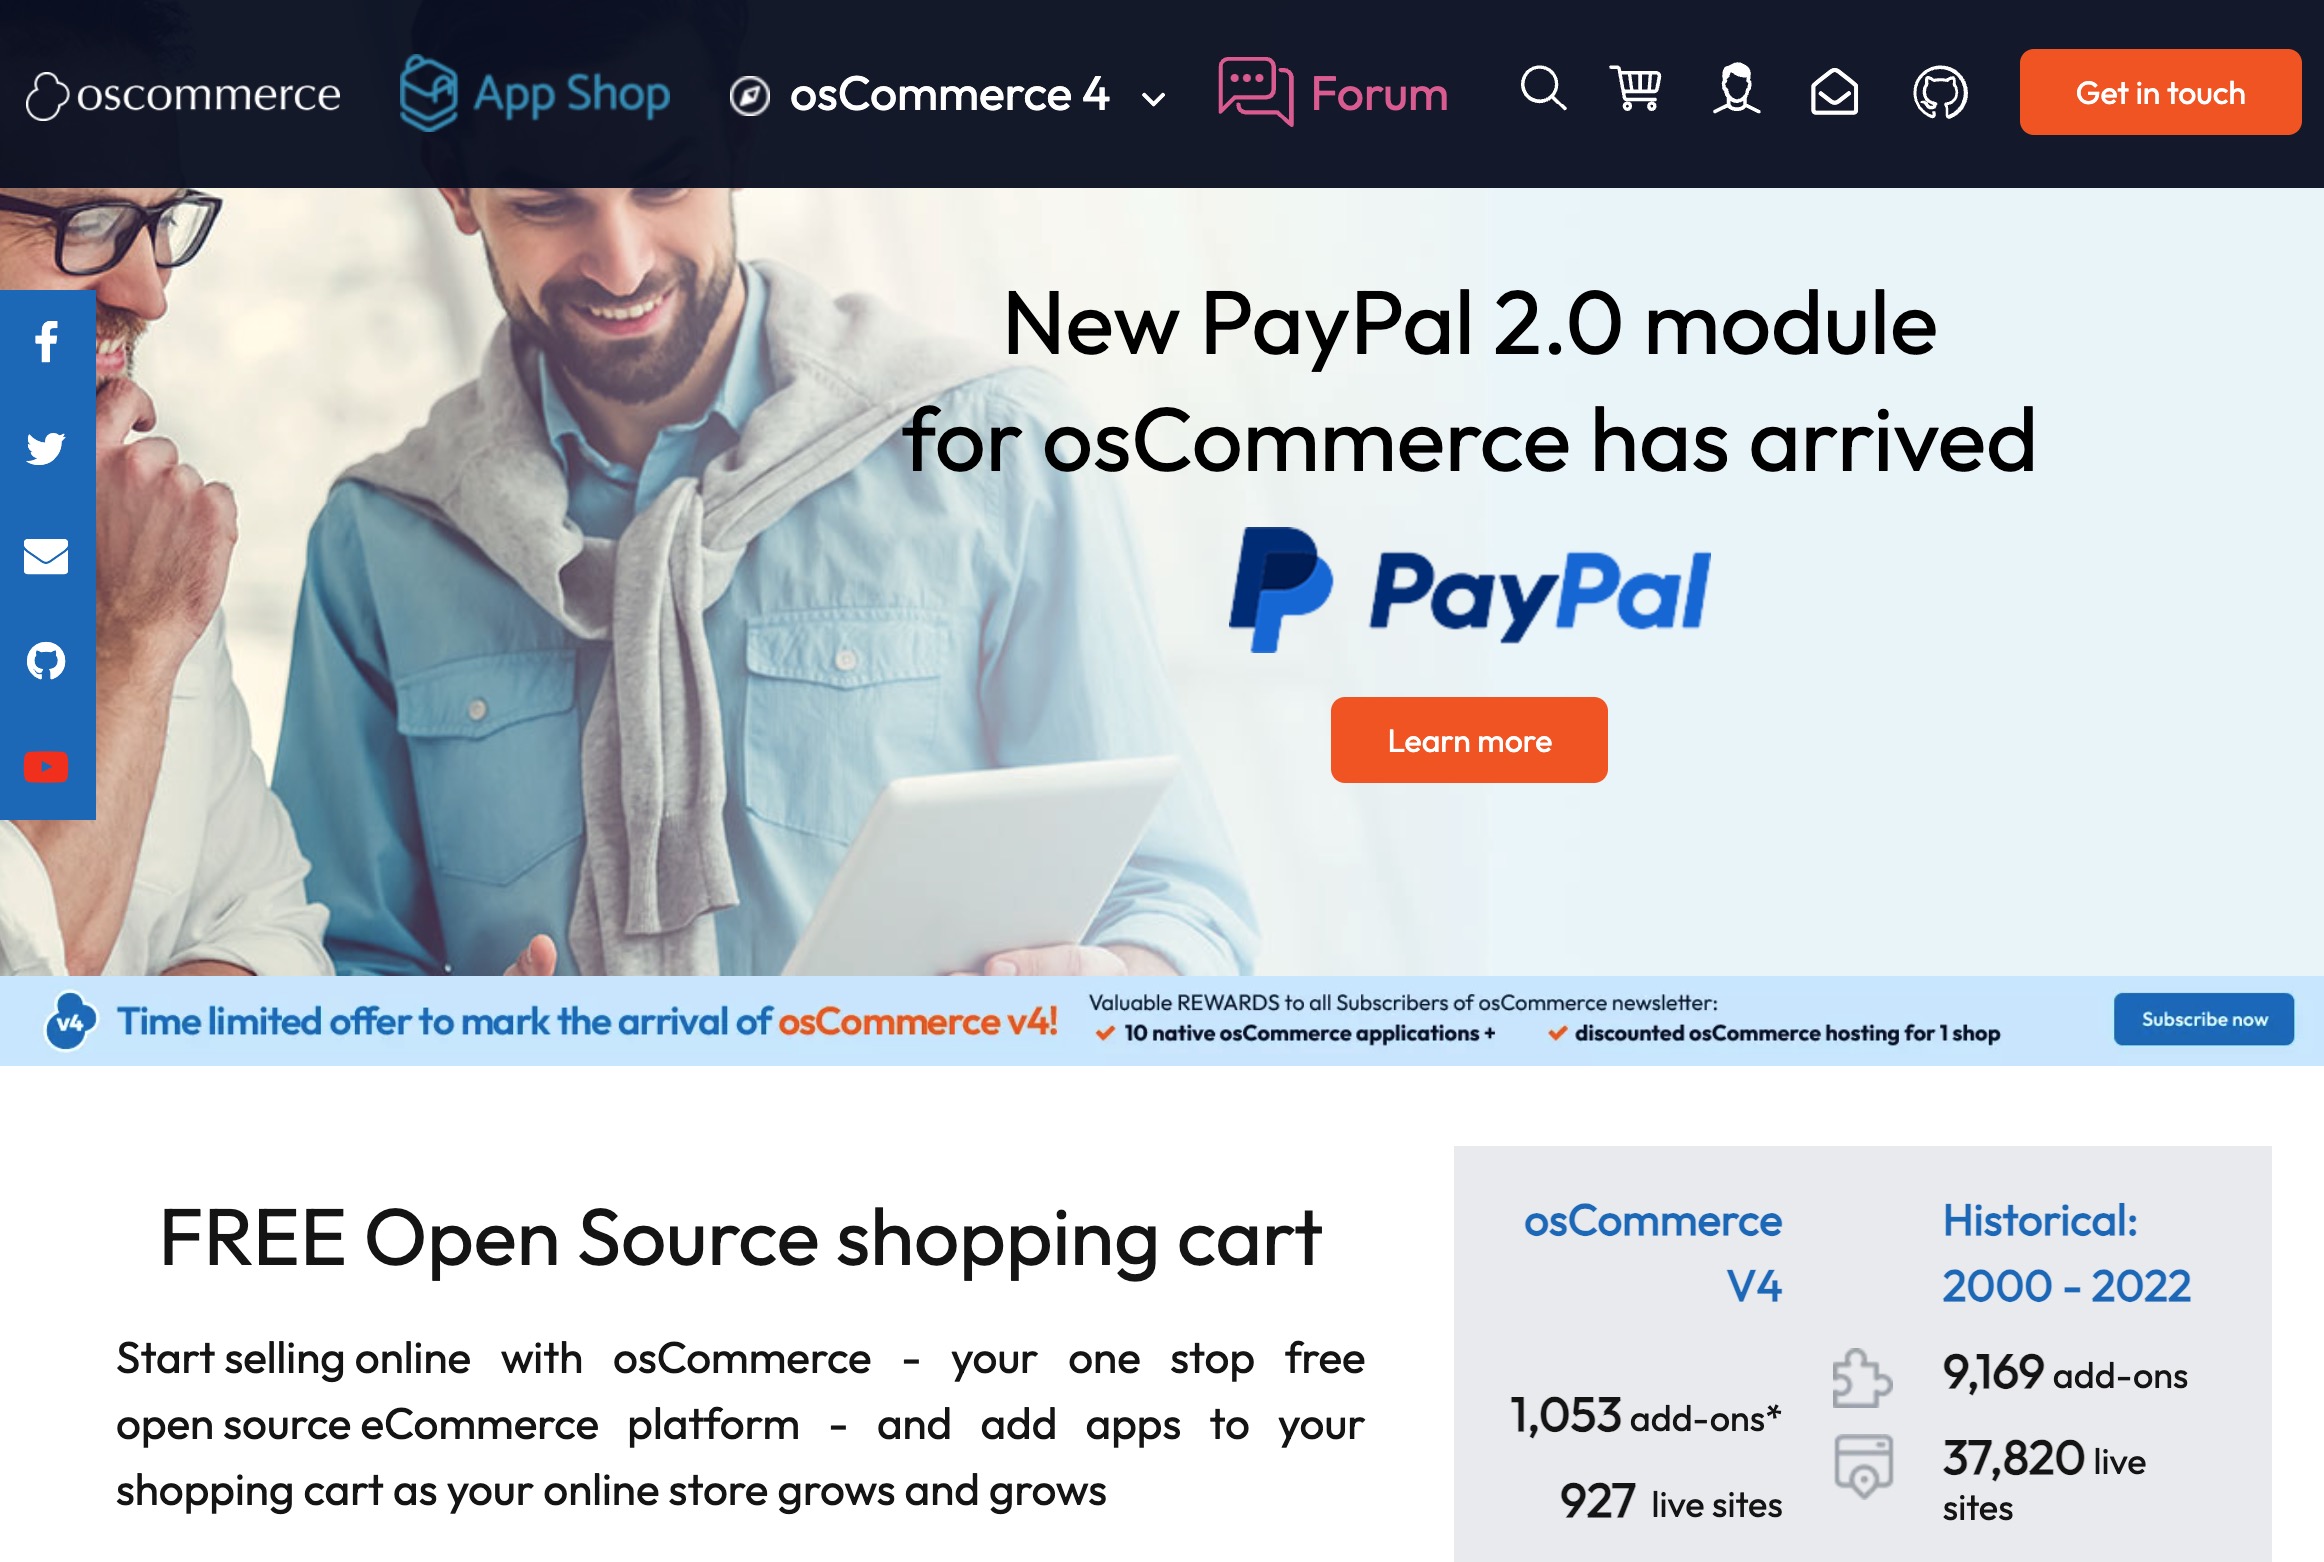 osCommerce homepage.